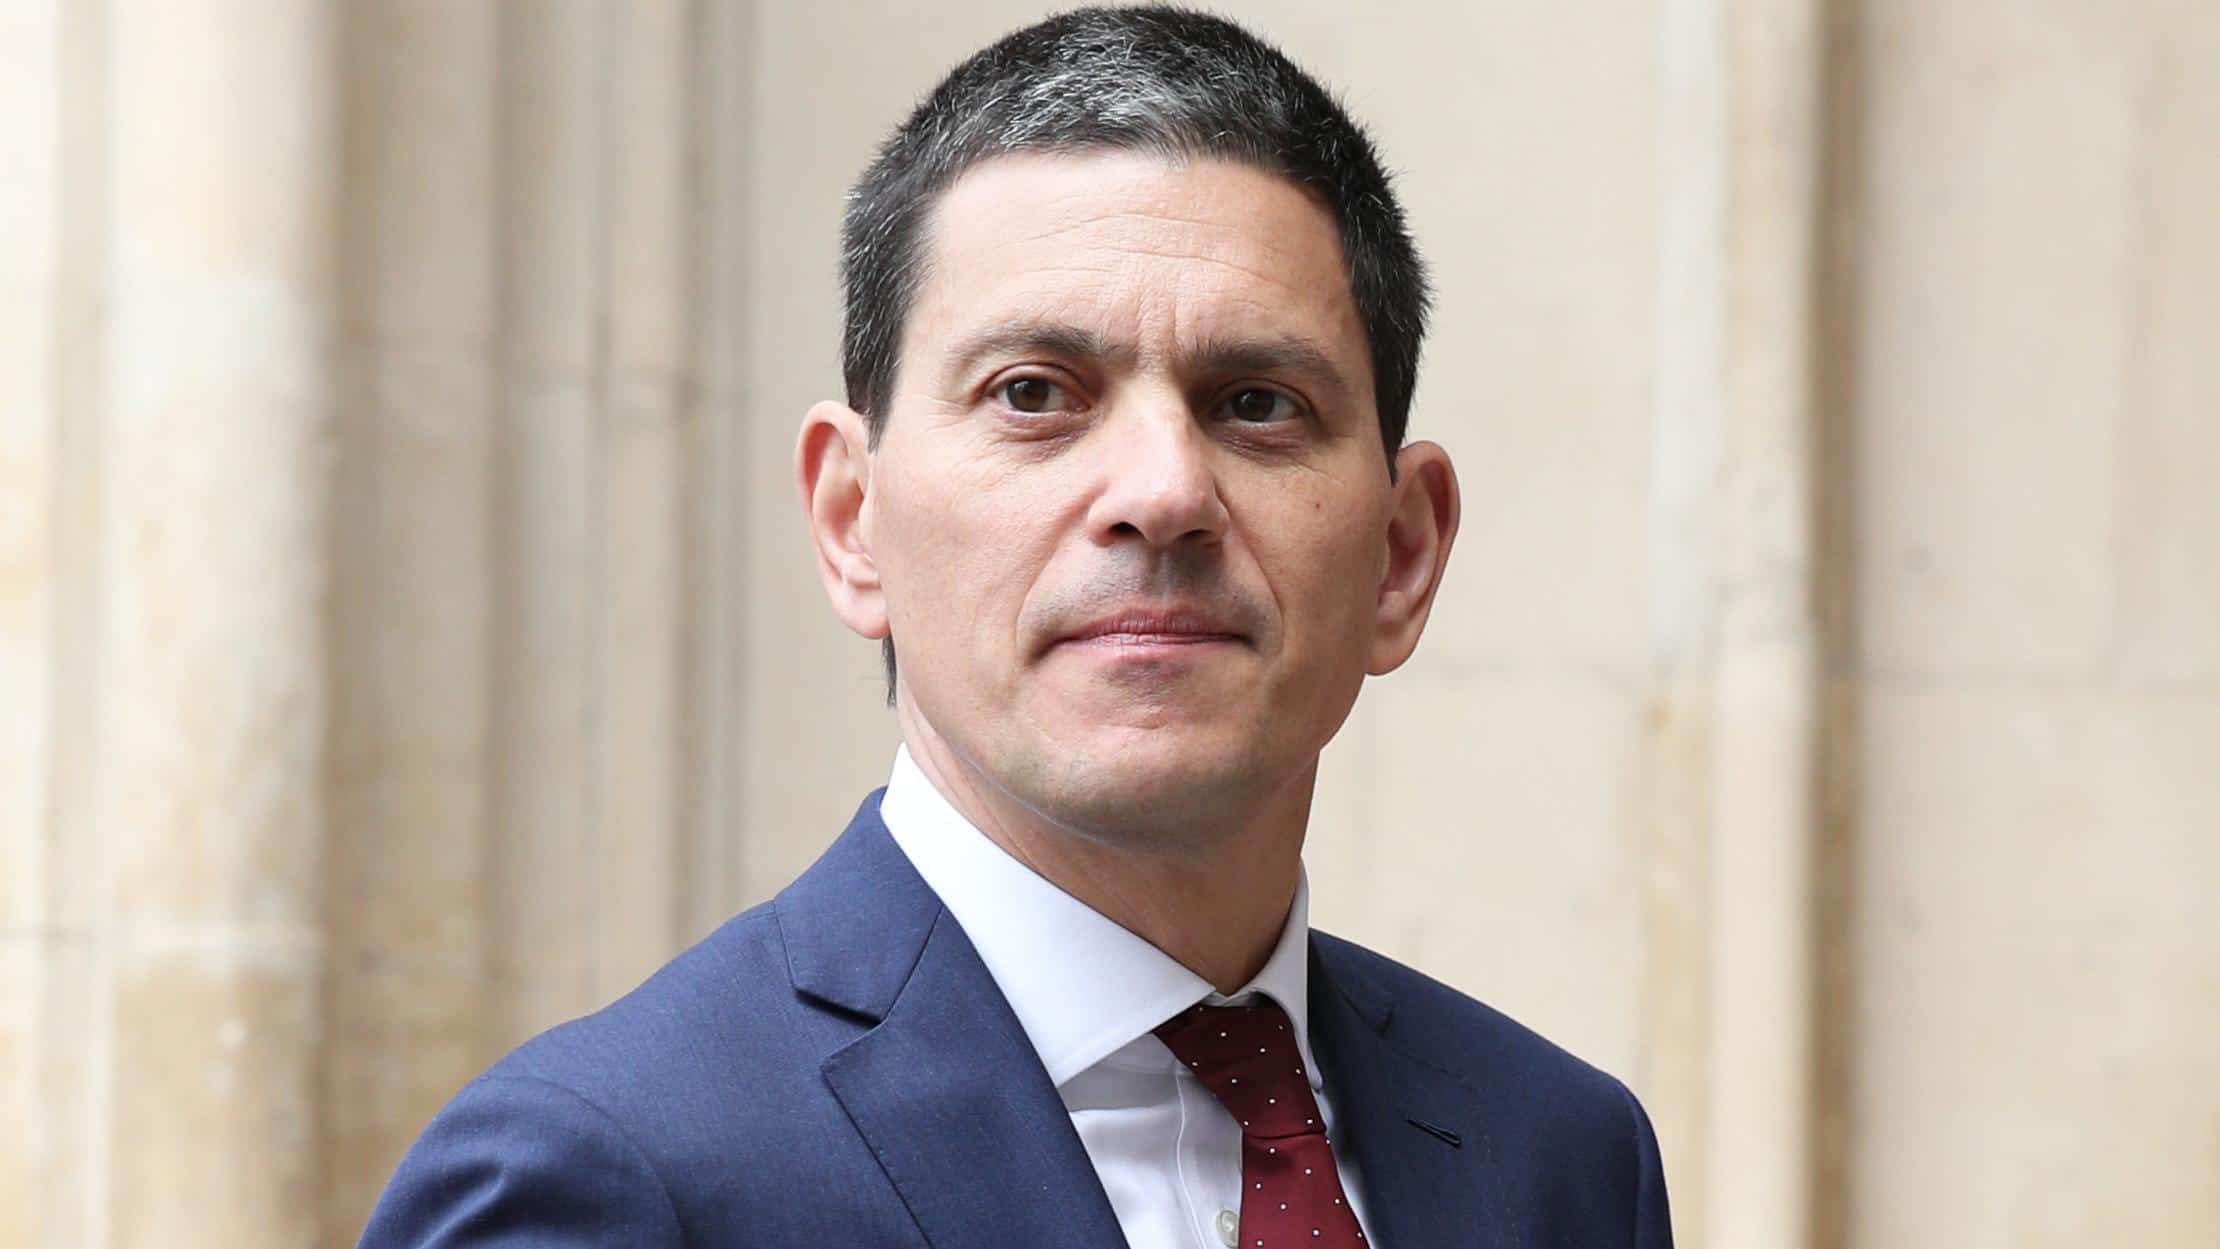 UK has ‘shredded’ its reputation with Brexit – David Miliband